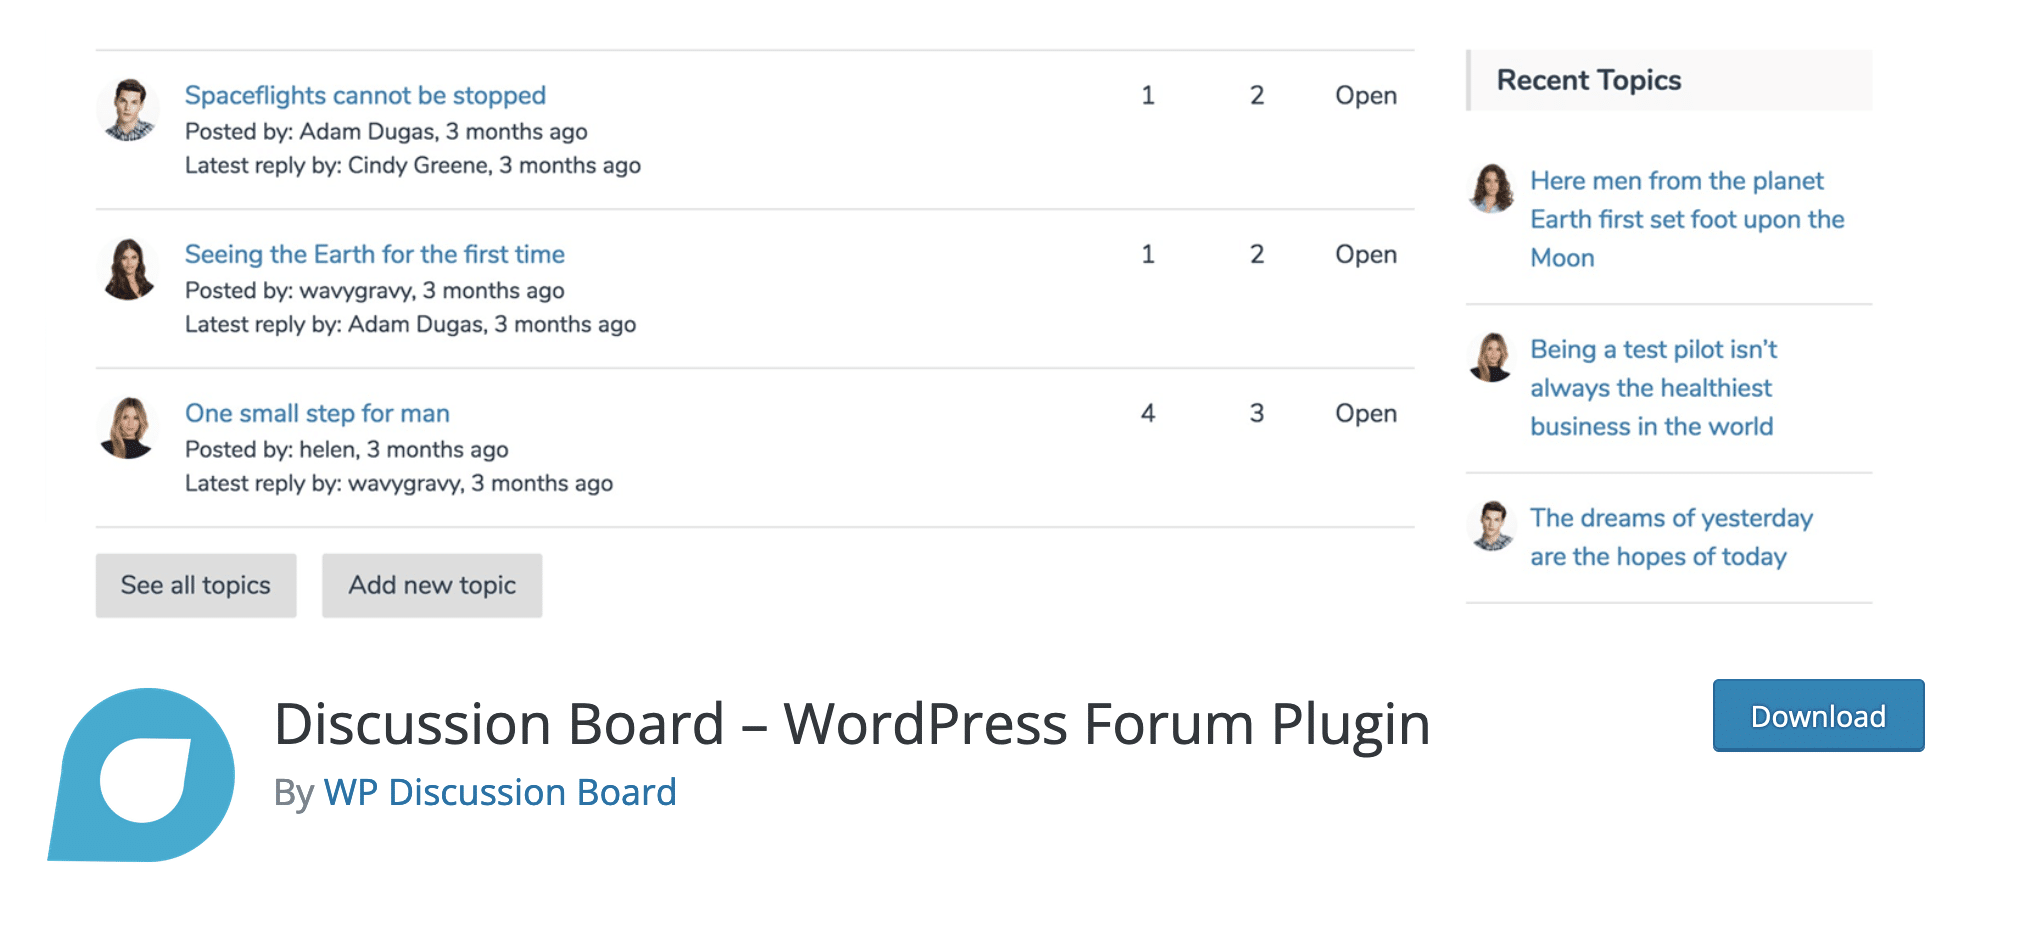 Discussion Board plugin download page.